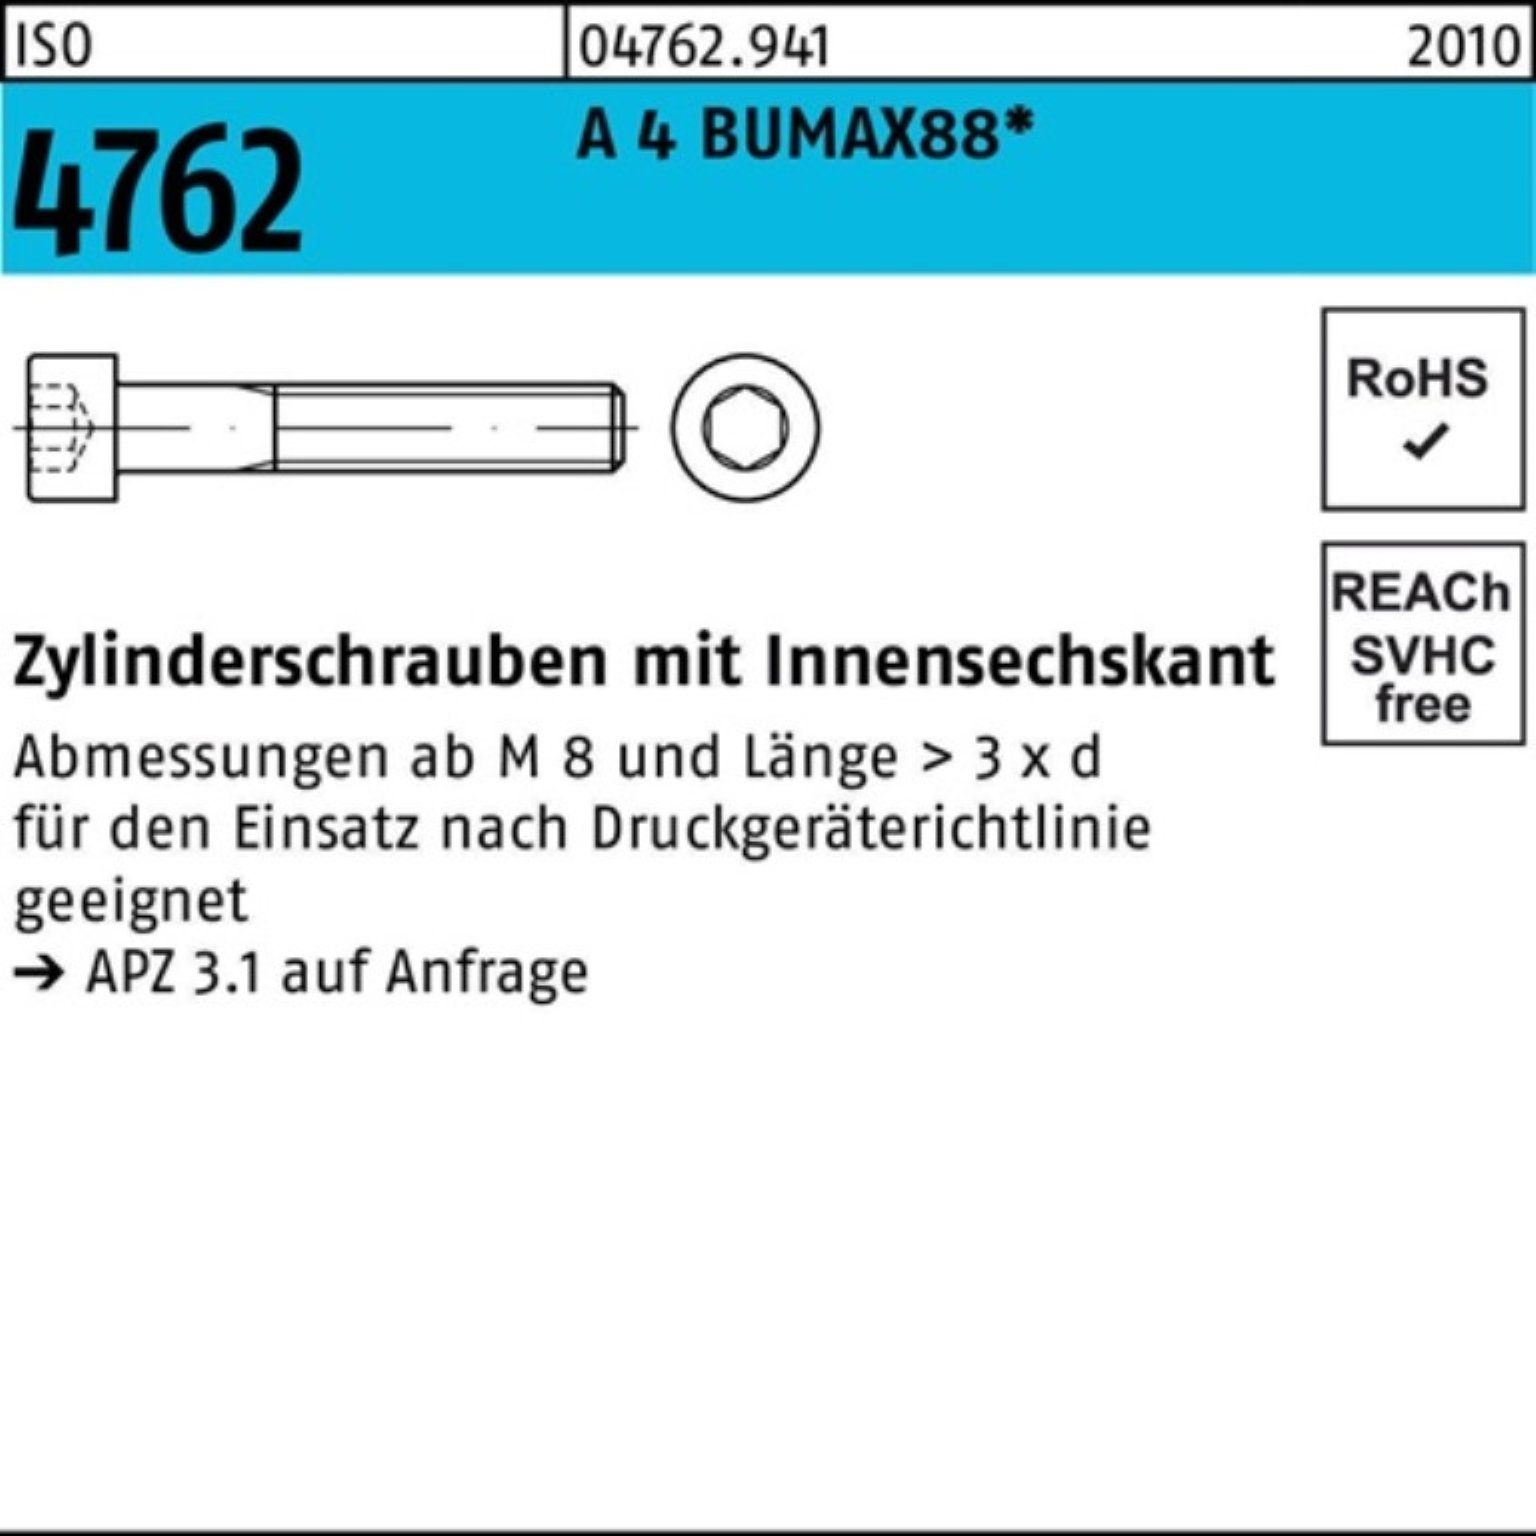 Innen-6kt BUMAX88 A 500 4 12 Bufab 500er Pack M3x ISO Zylinderschraube 4762 Zylinderschraube